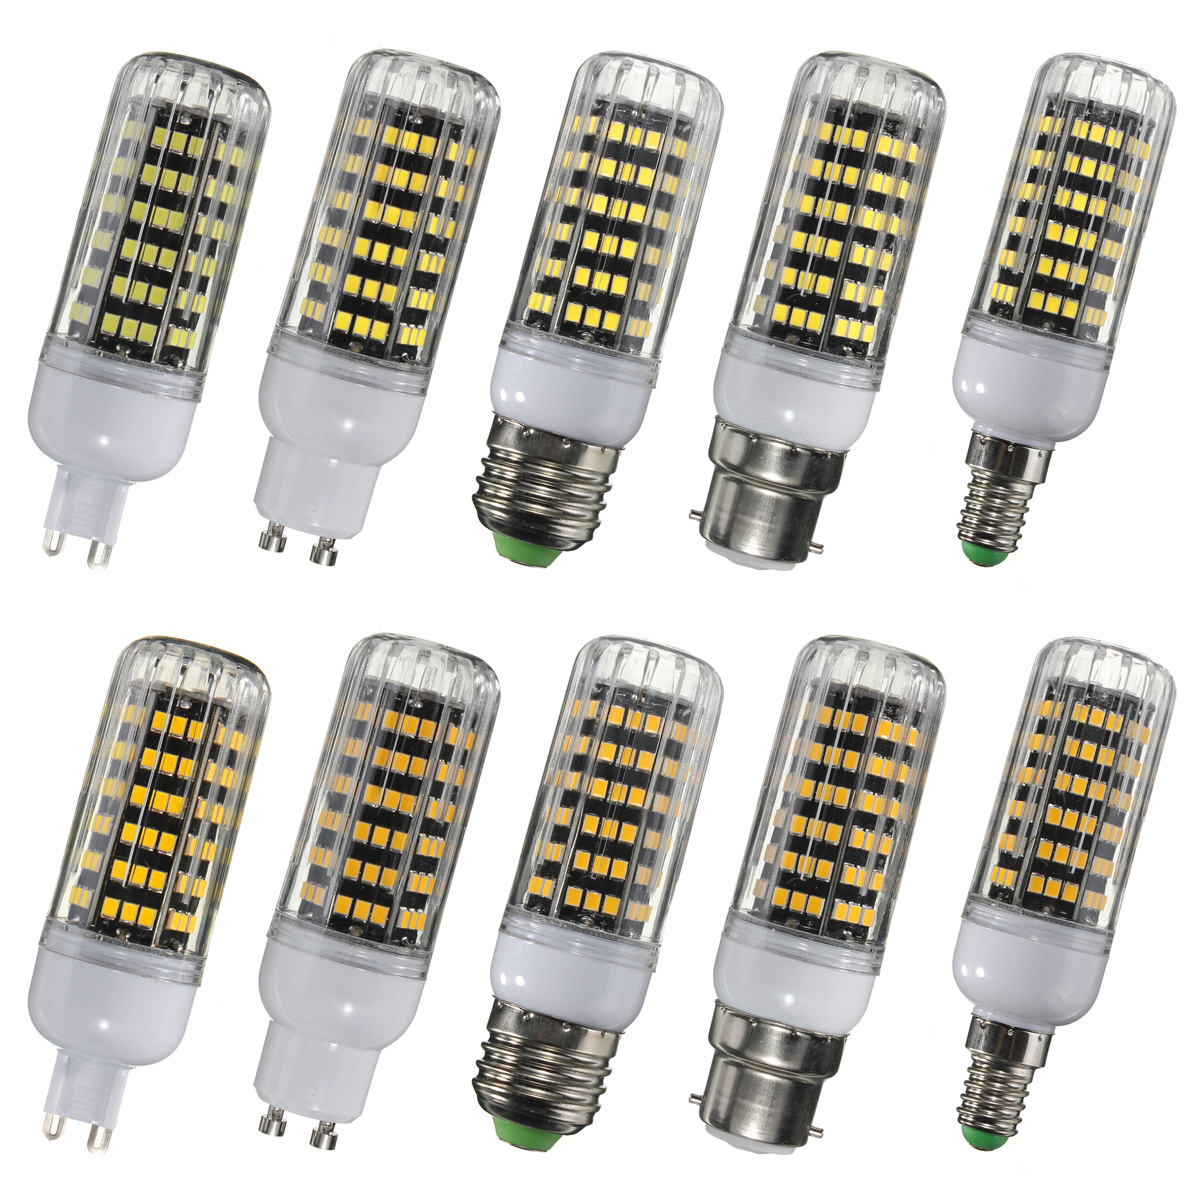 

E14 e27 b22 G9 10w g10 123 СМД 2835 LED покрывают кукуруза свет колбы лампы переменного тока 220В